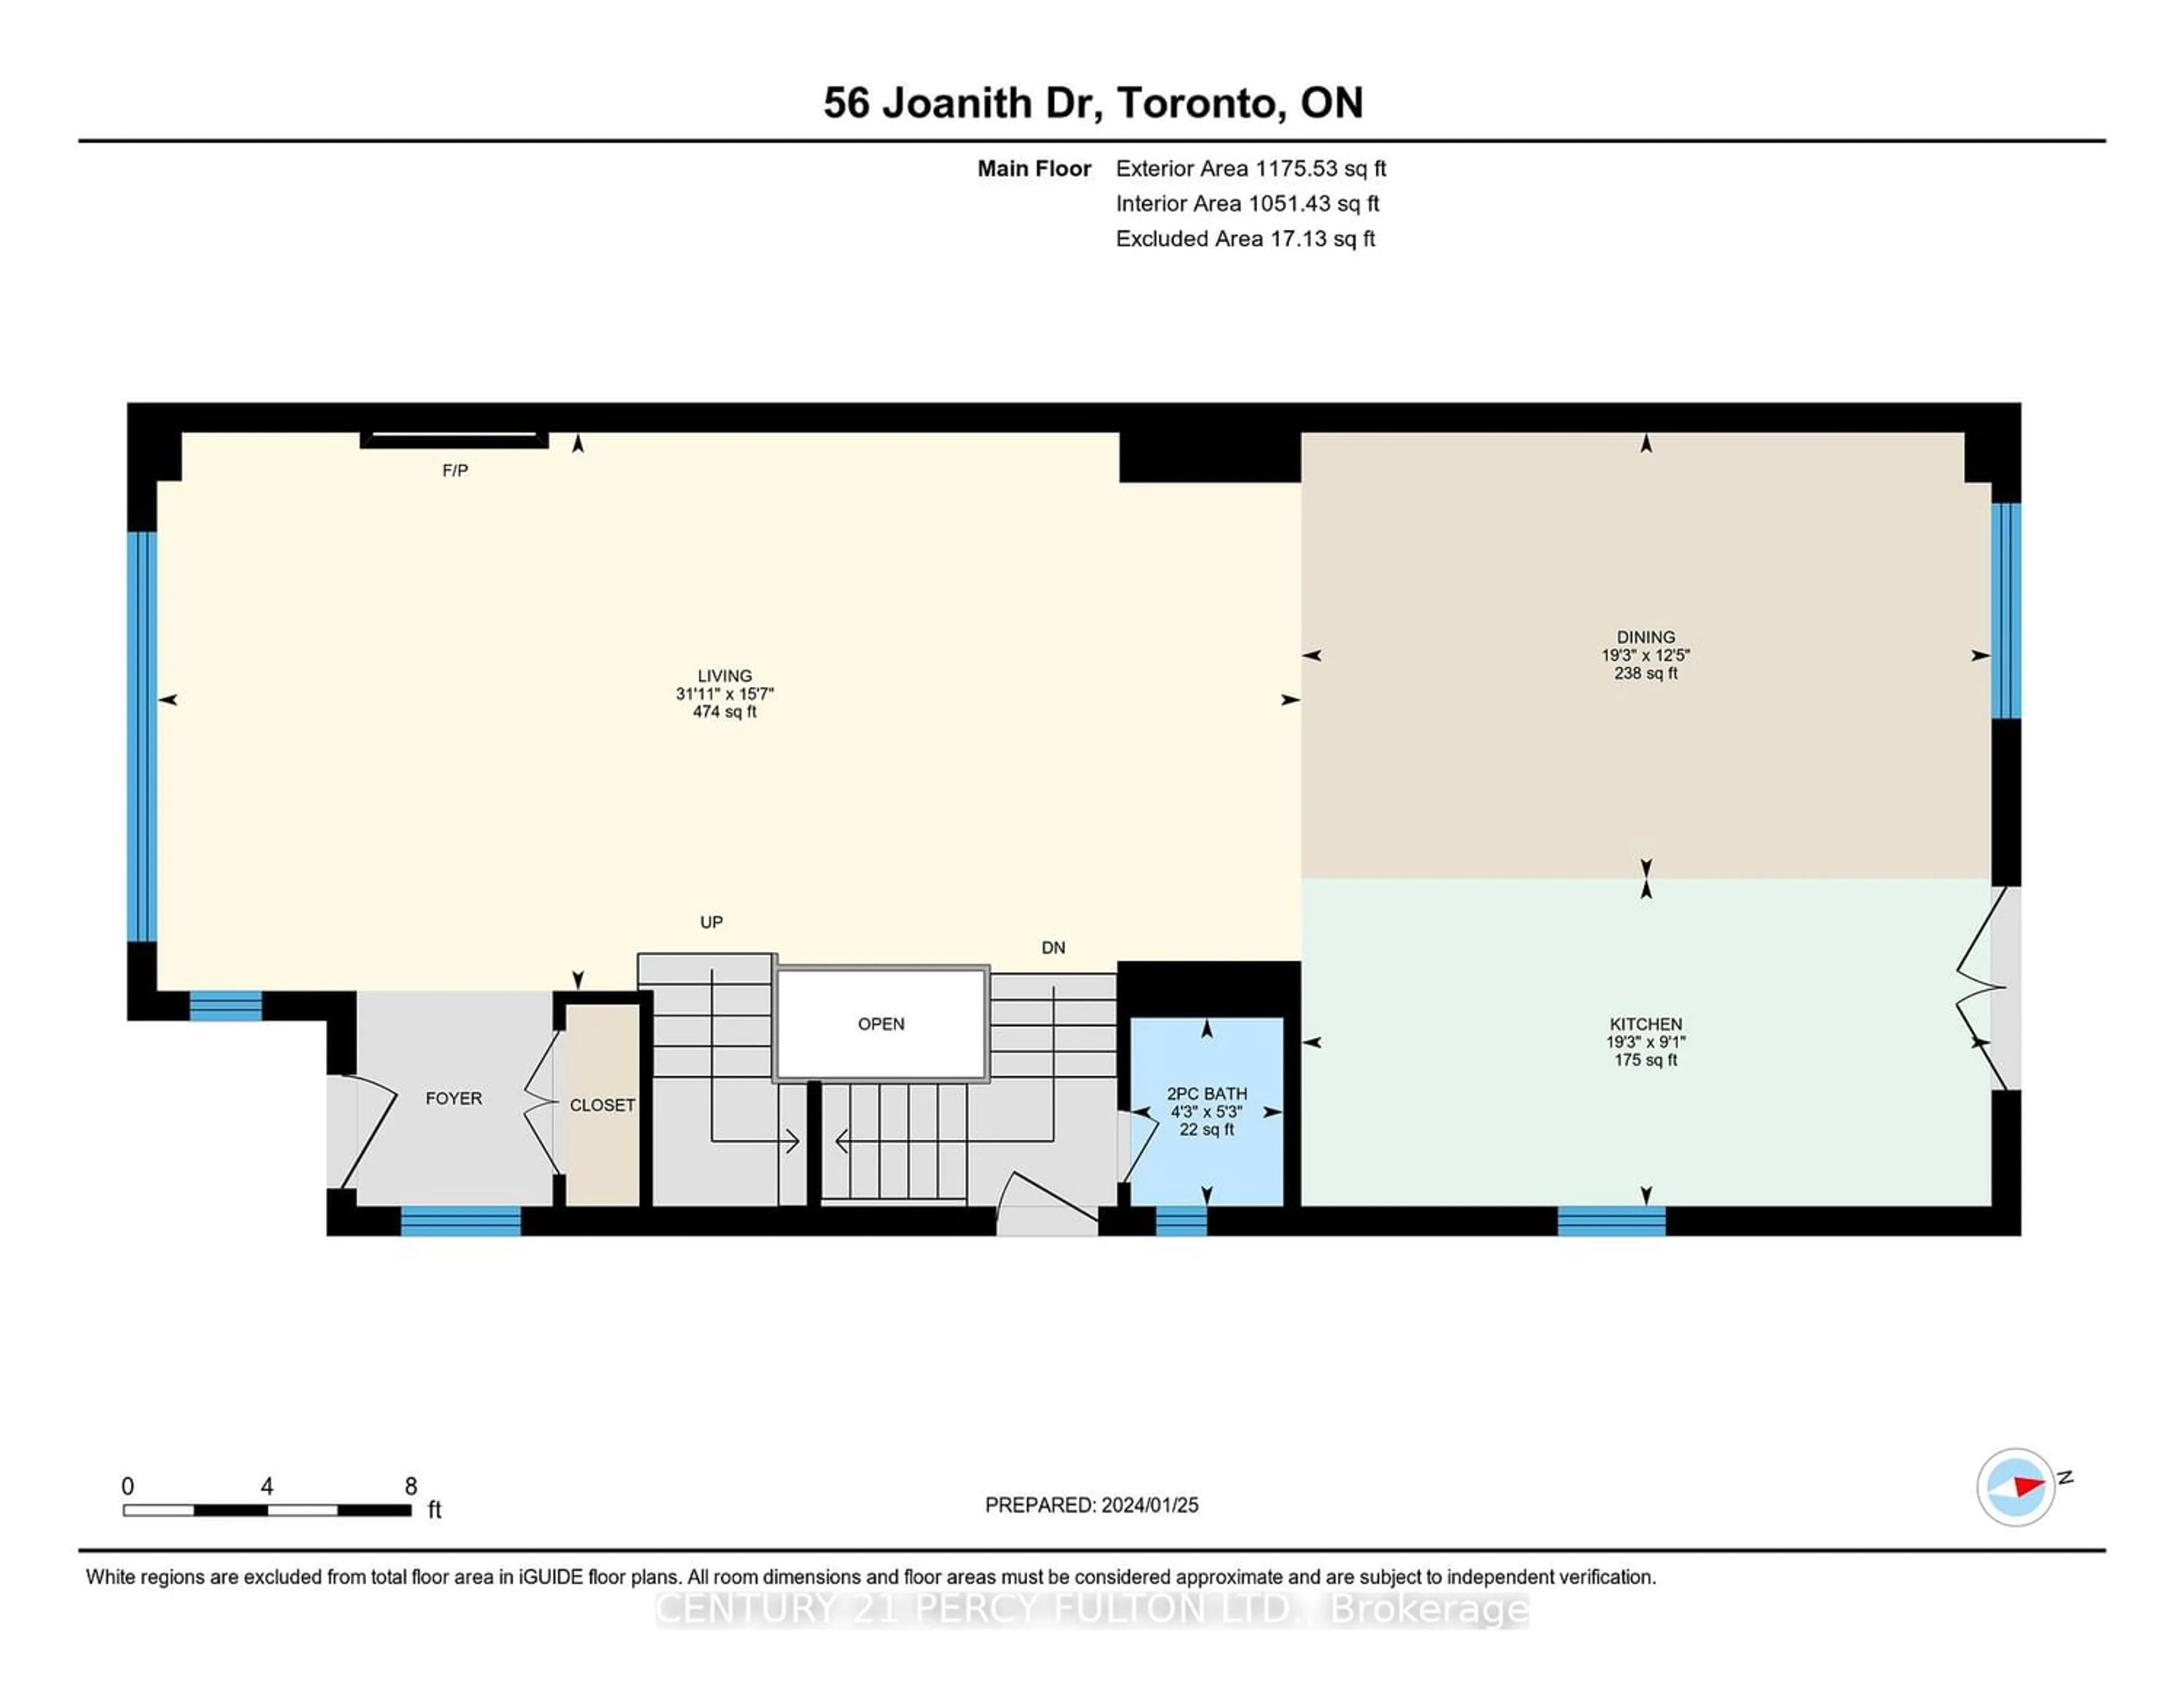 Floor plan for 56 Joanith Dr, Toronto Ontario M4B 1S7